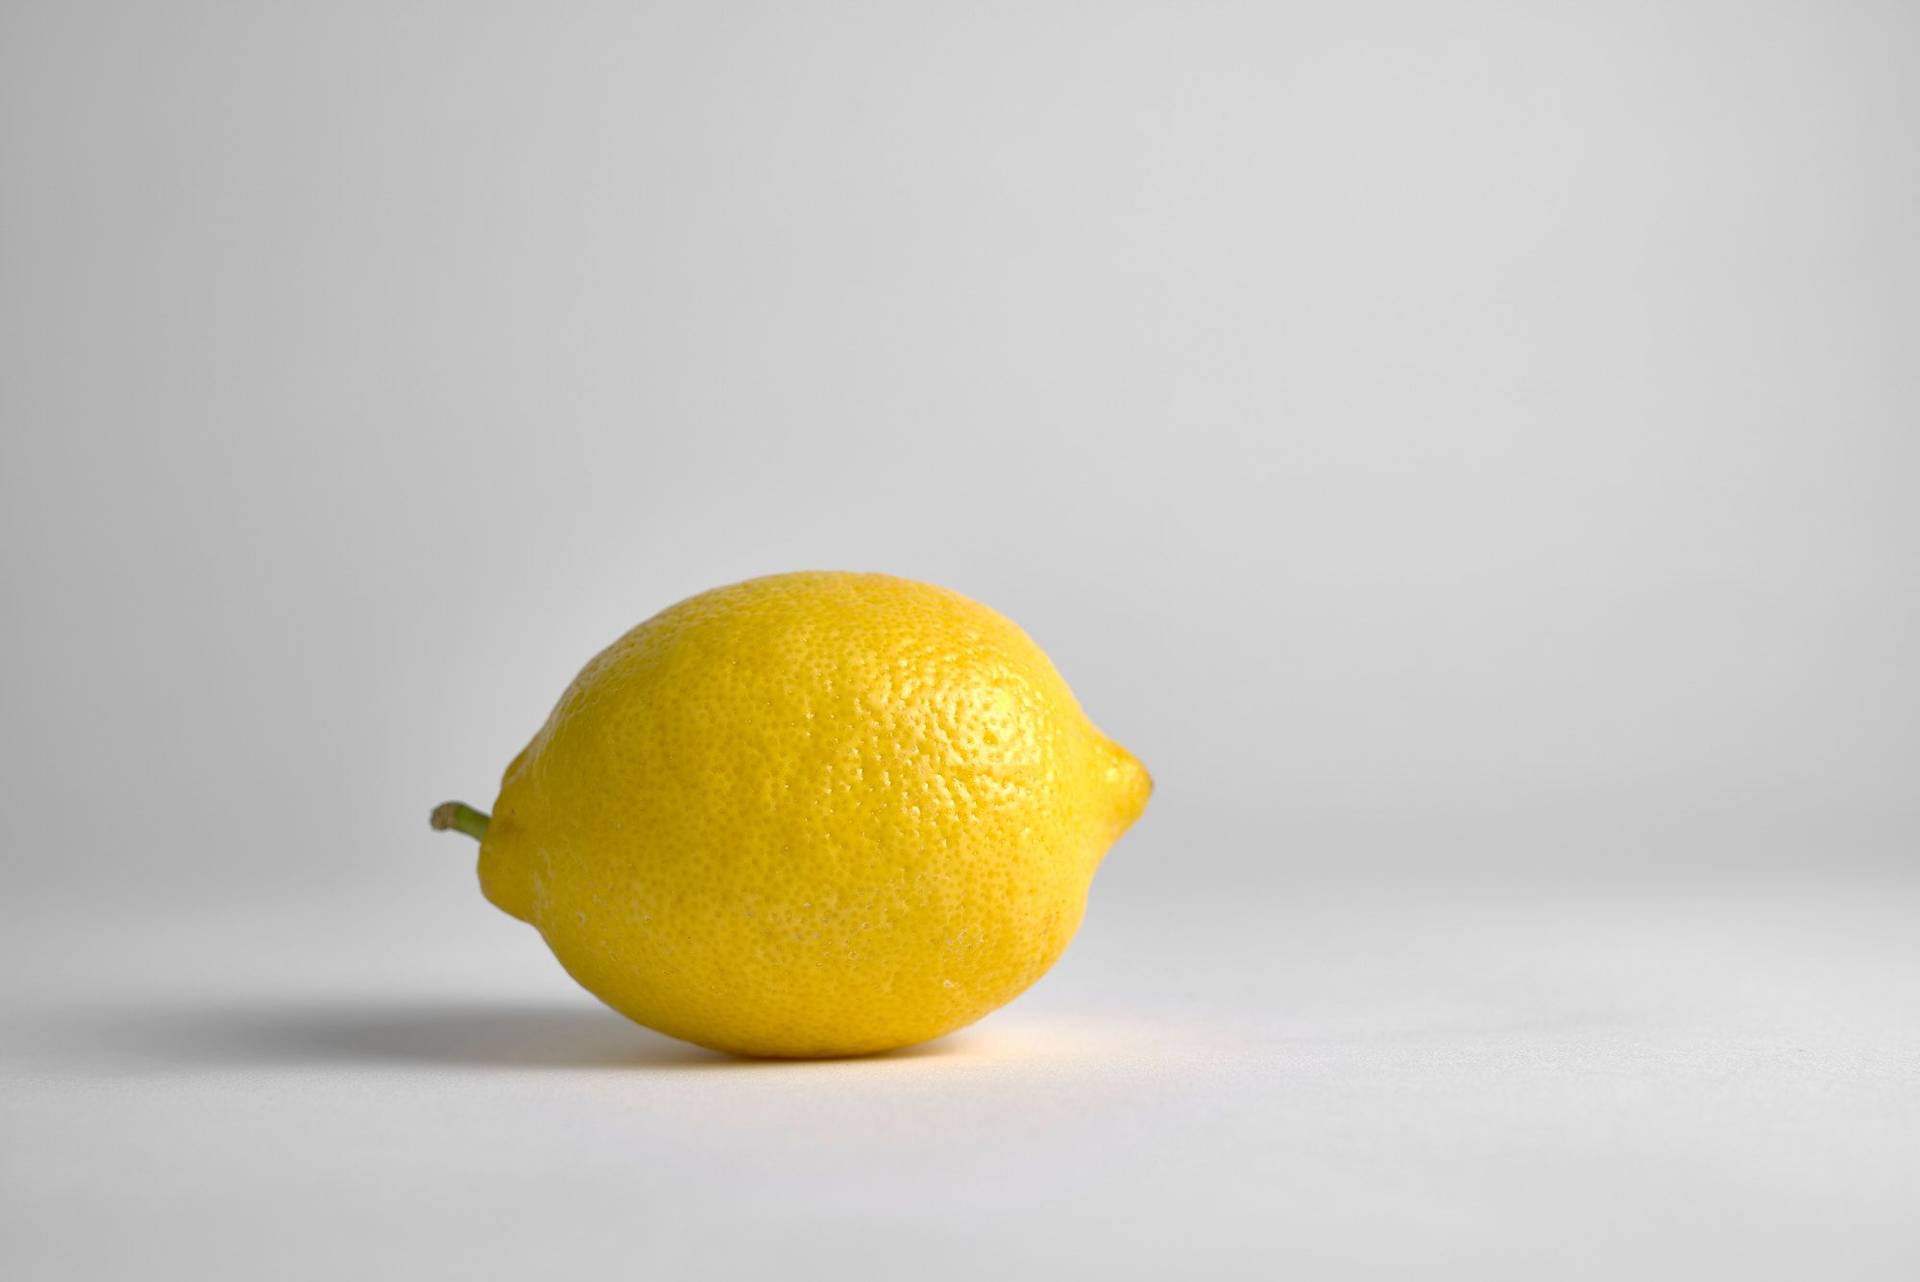 a lemon on white background